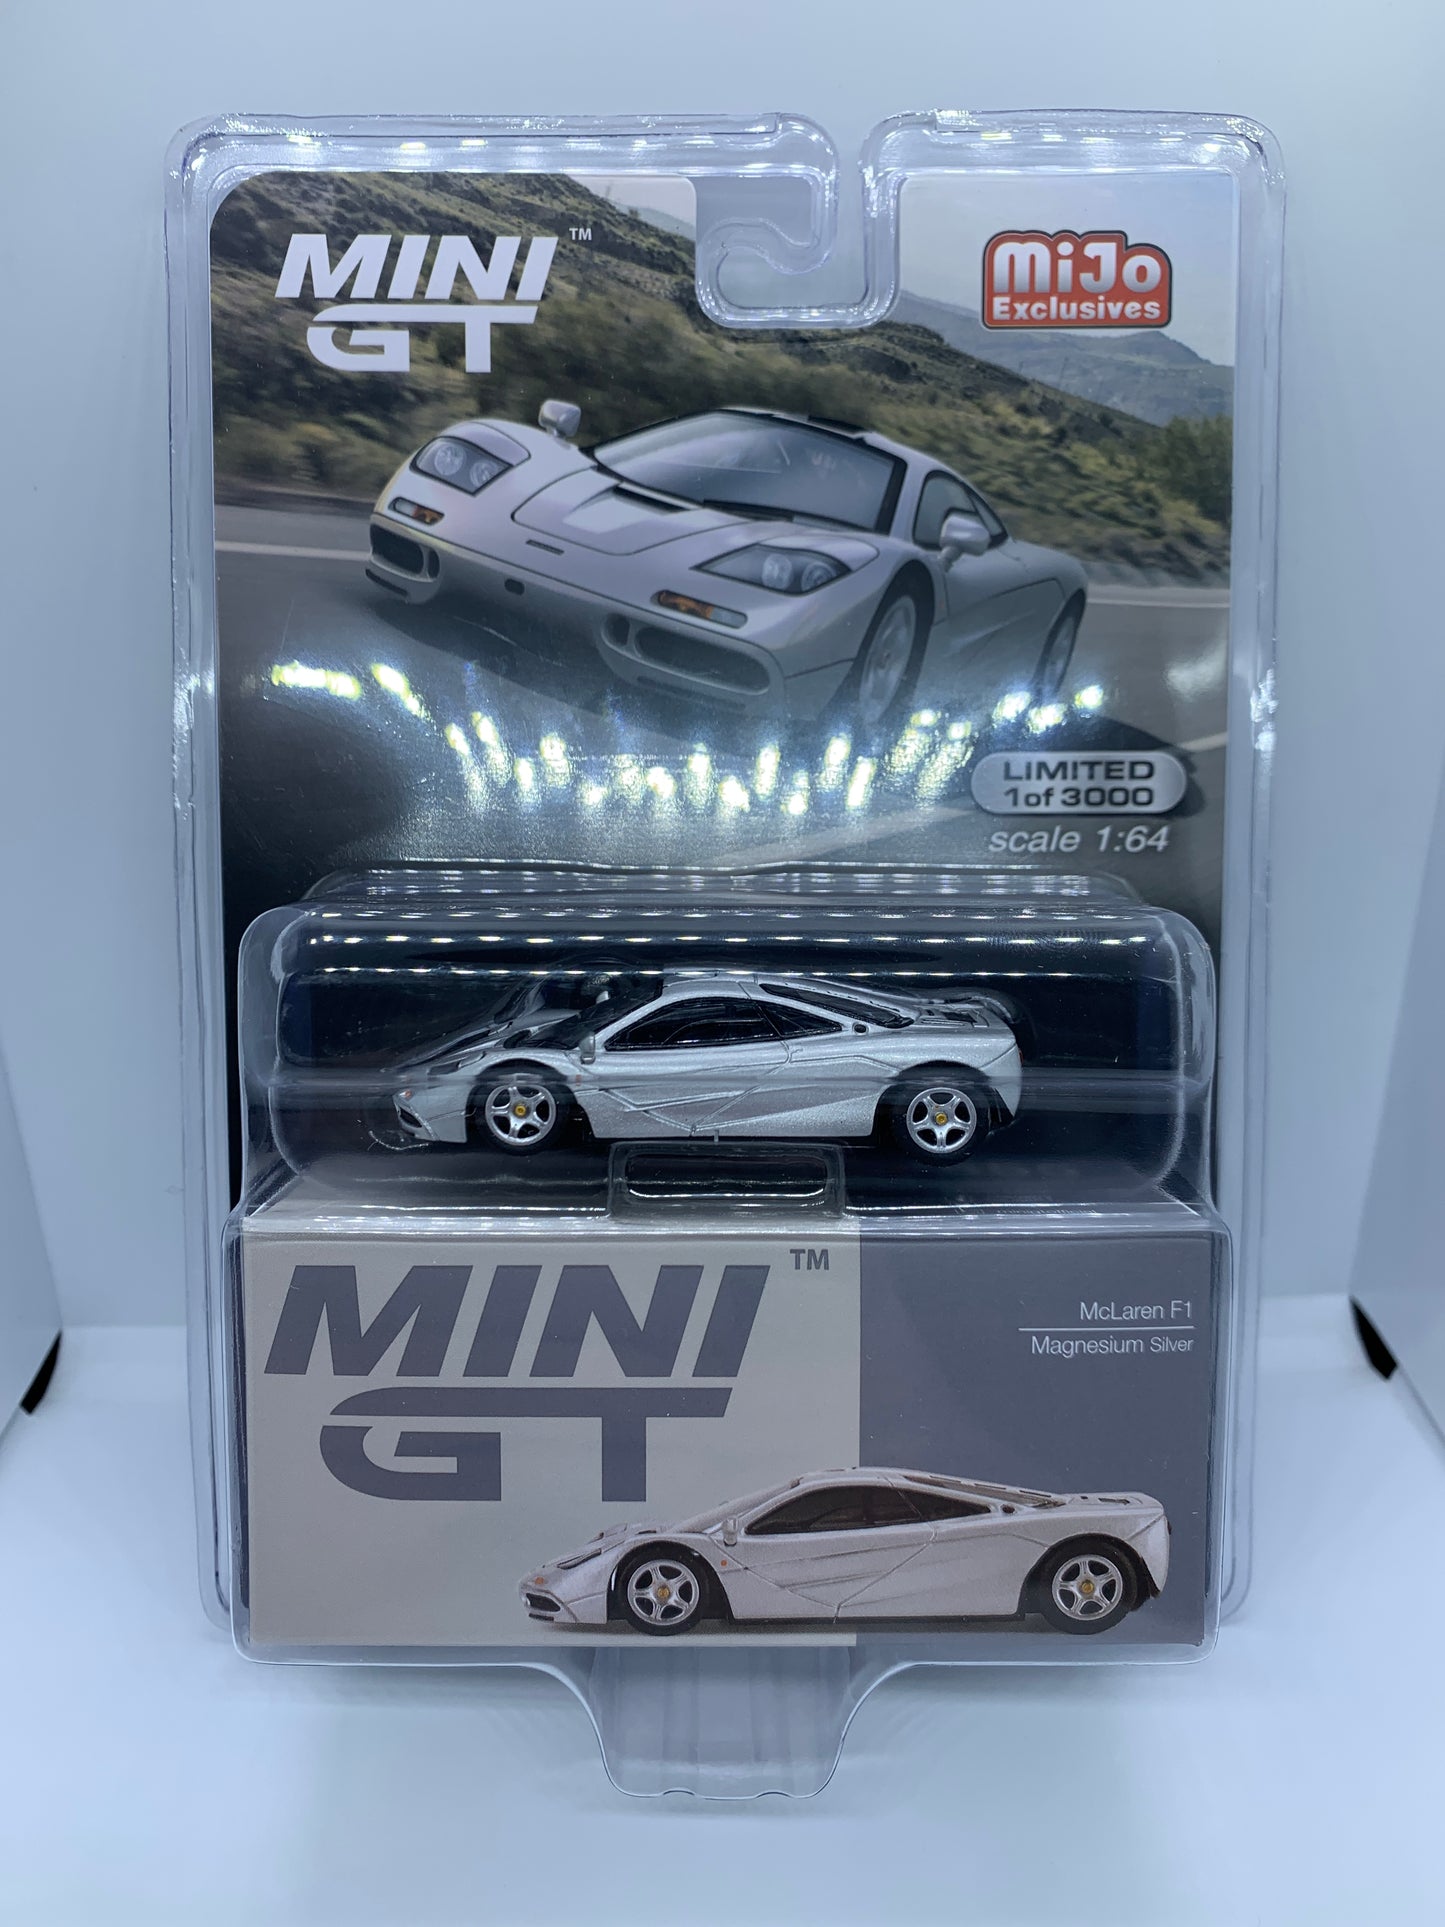 MINI GT - McLaren F1 Magnesium Silver - Display Blister Packaging